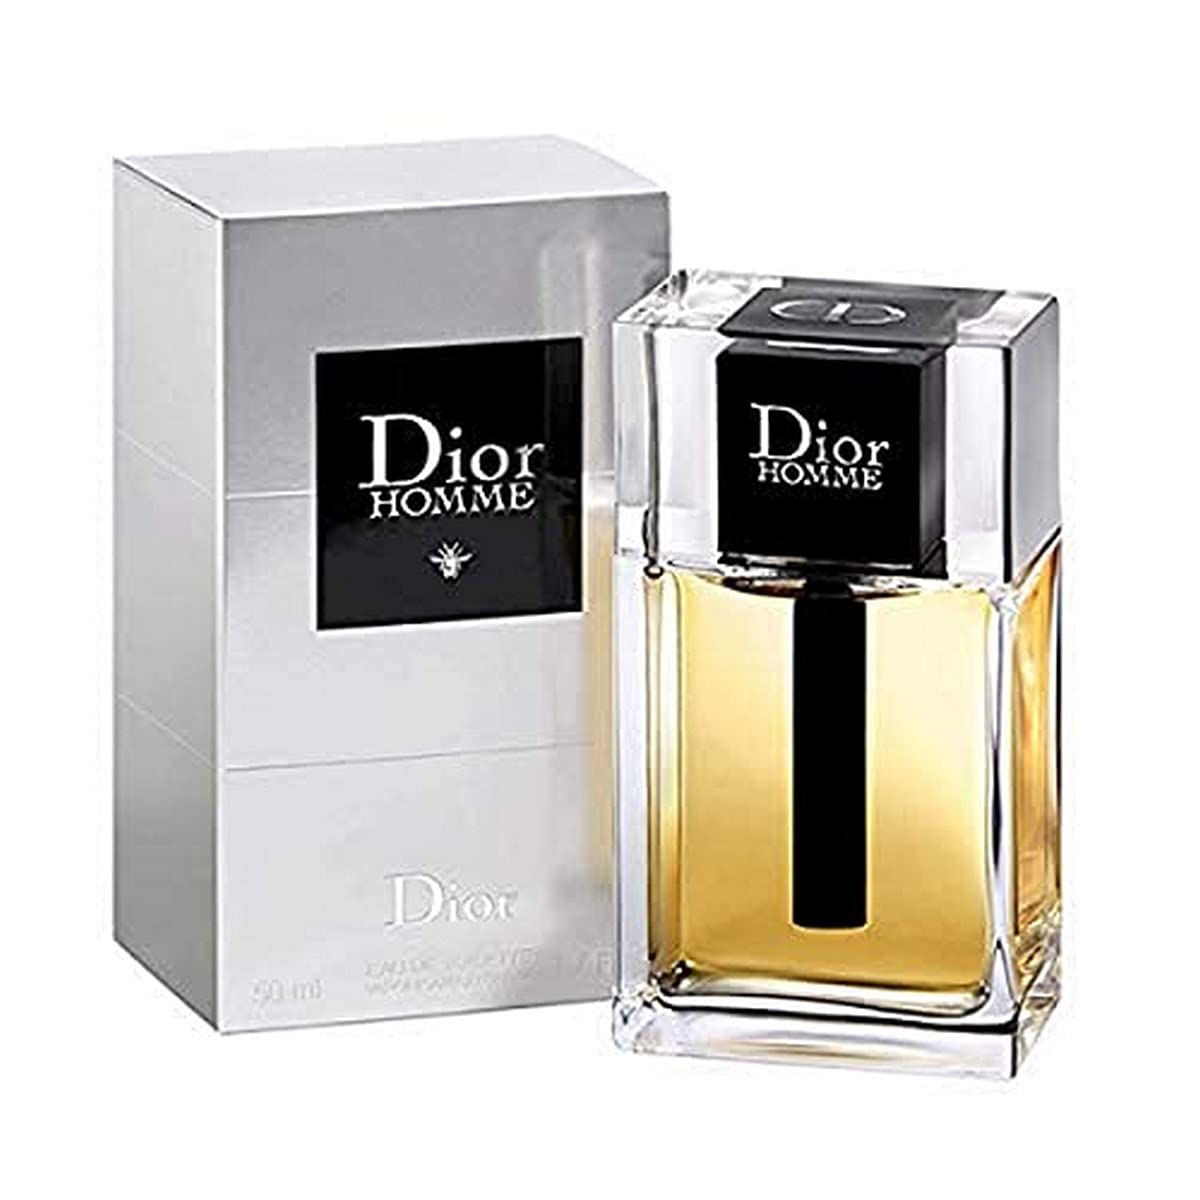 Dior Perfume  Dior Homme by Christian Dior  perfume for men  Eau de  Cologne 125ml  Amazonae Beauty